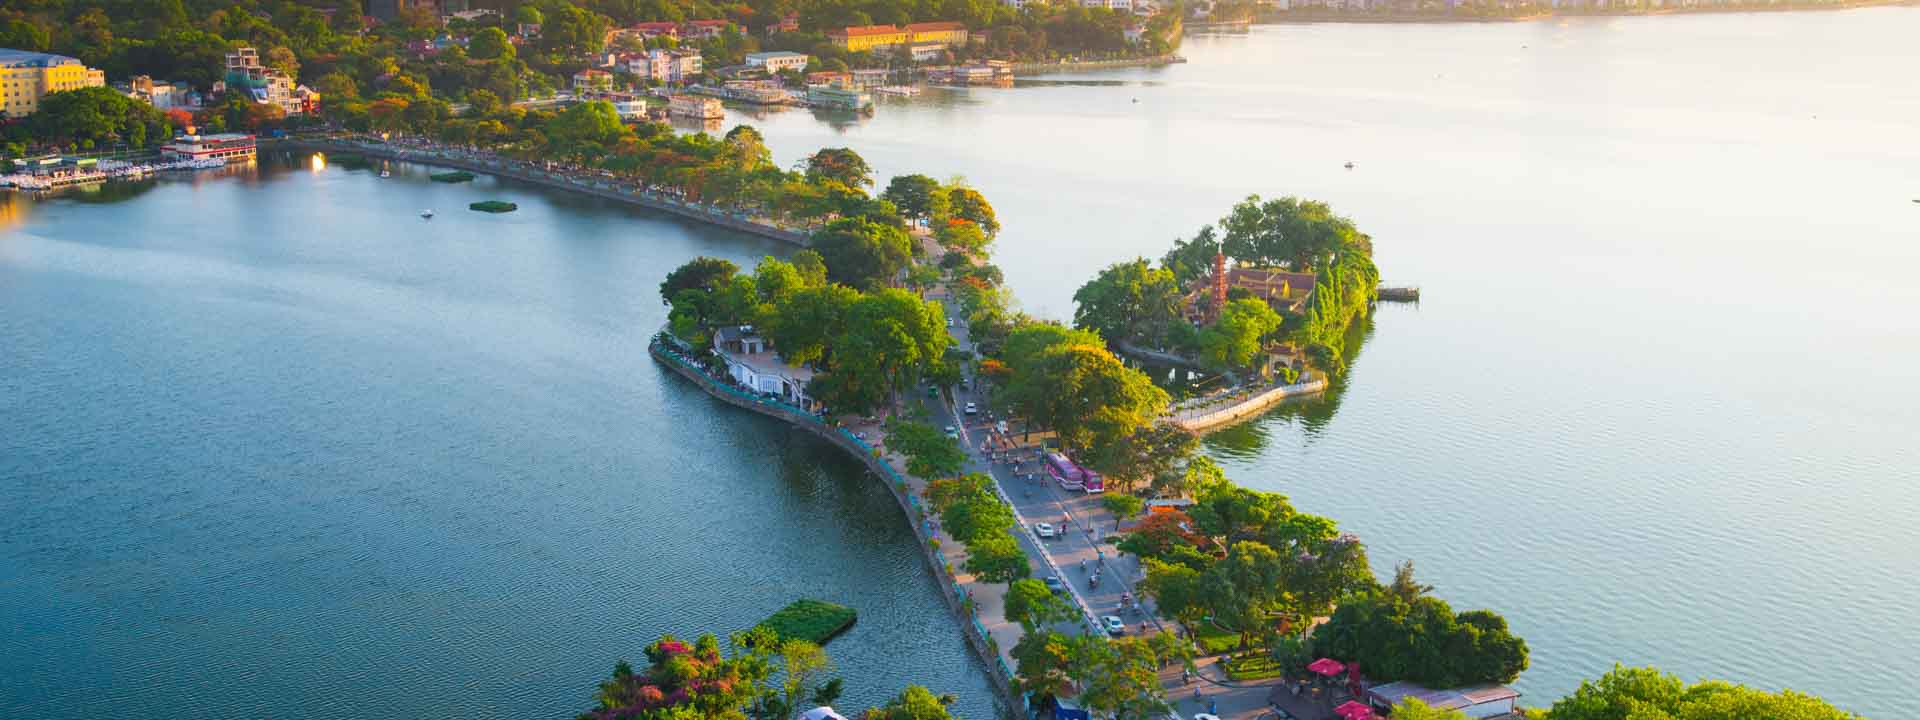 Vietnam delle meraviglie & Isola Phu Quoc 14 giorni